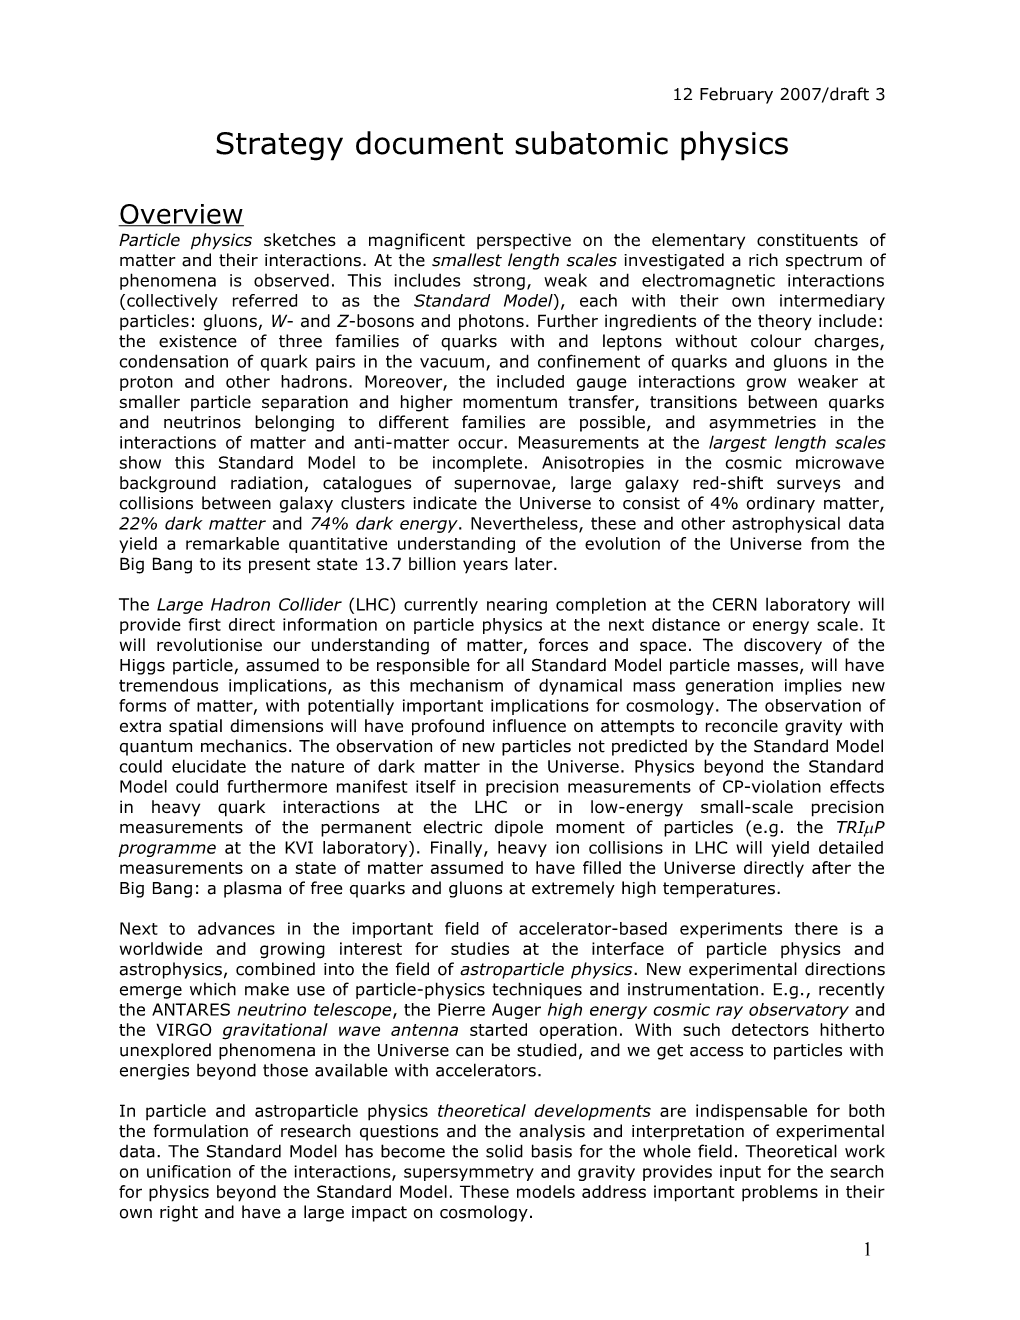 Strategy Document Subatomic Physics